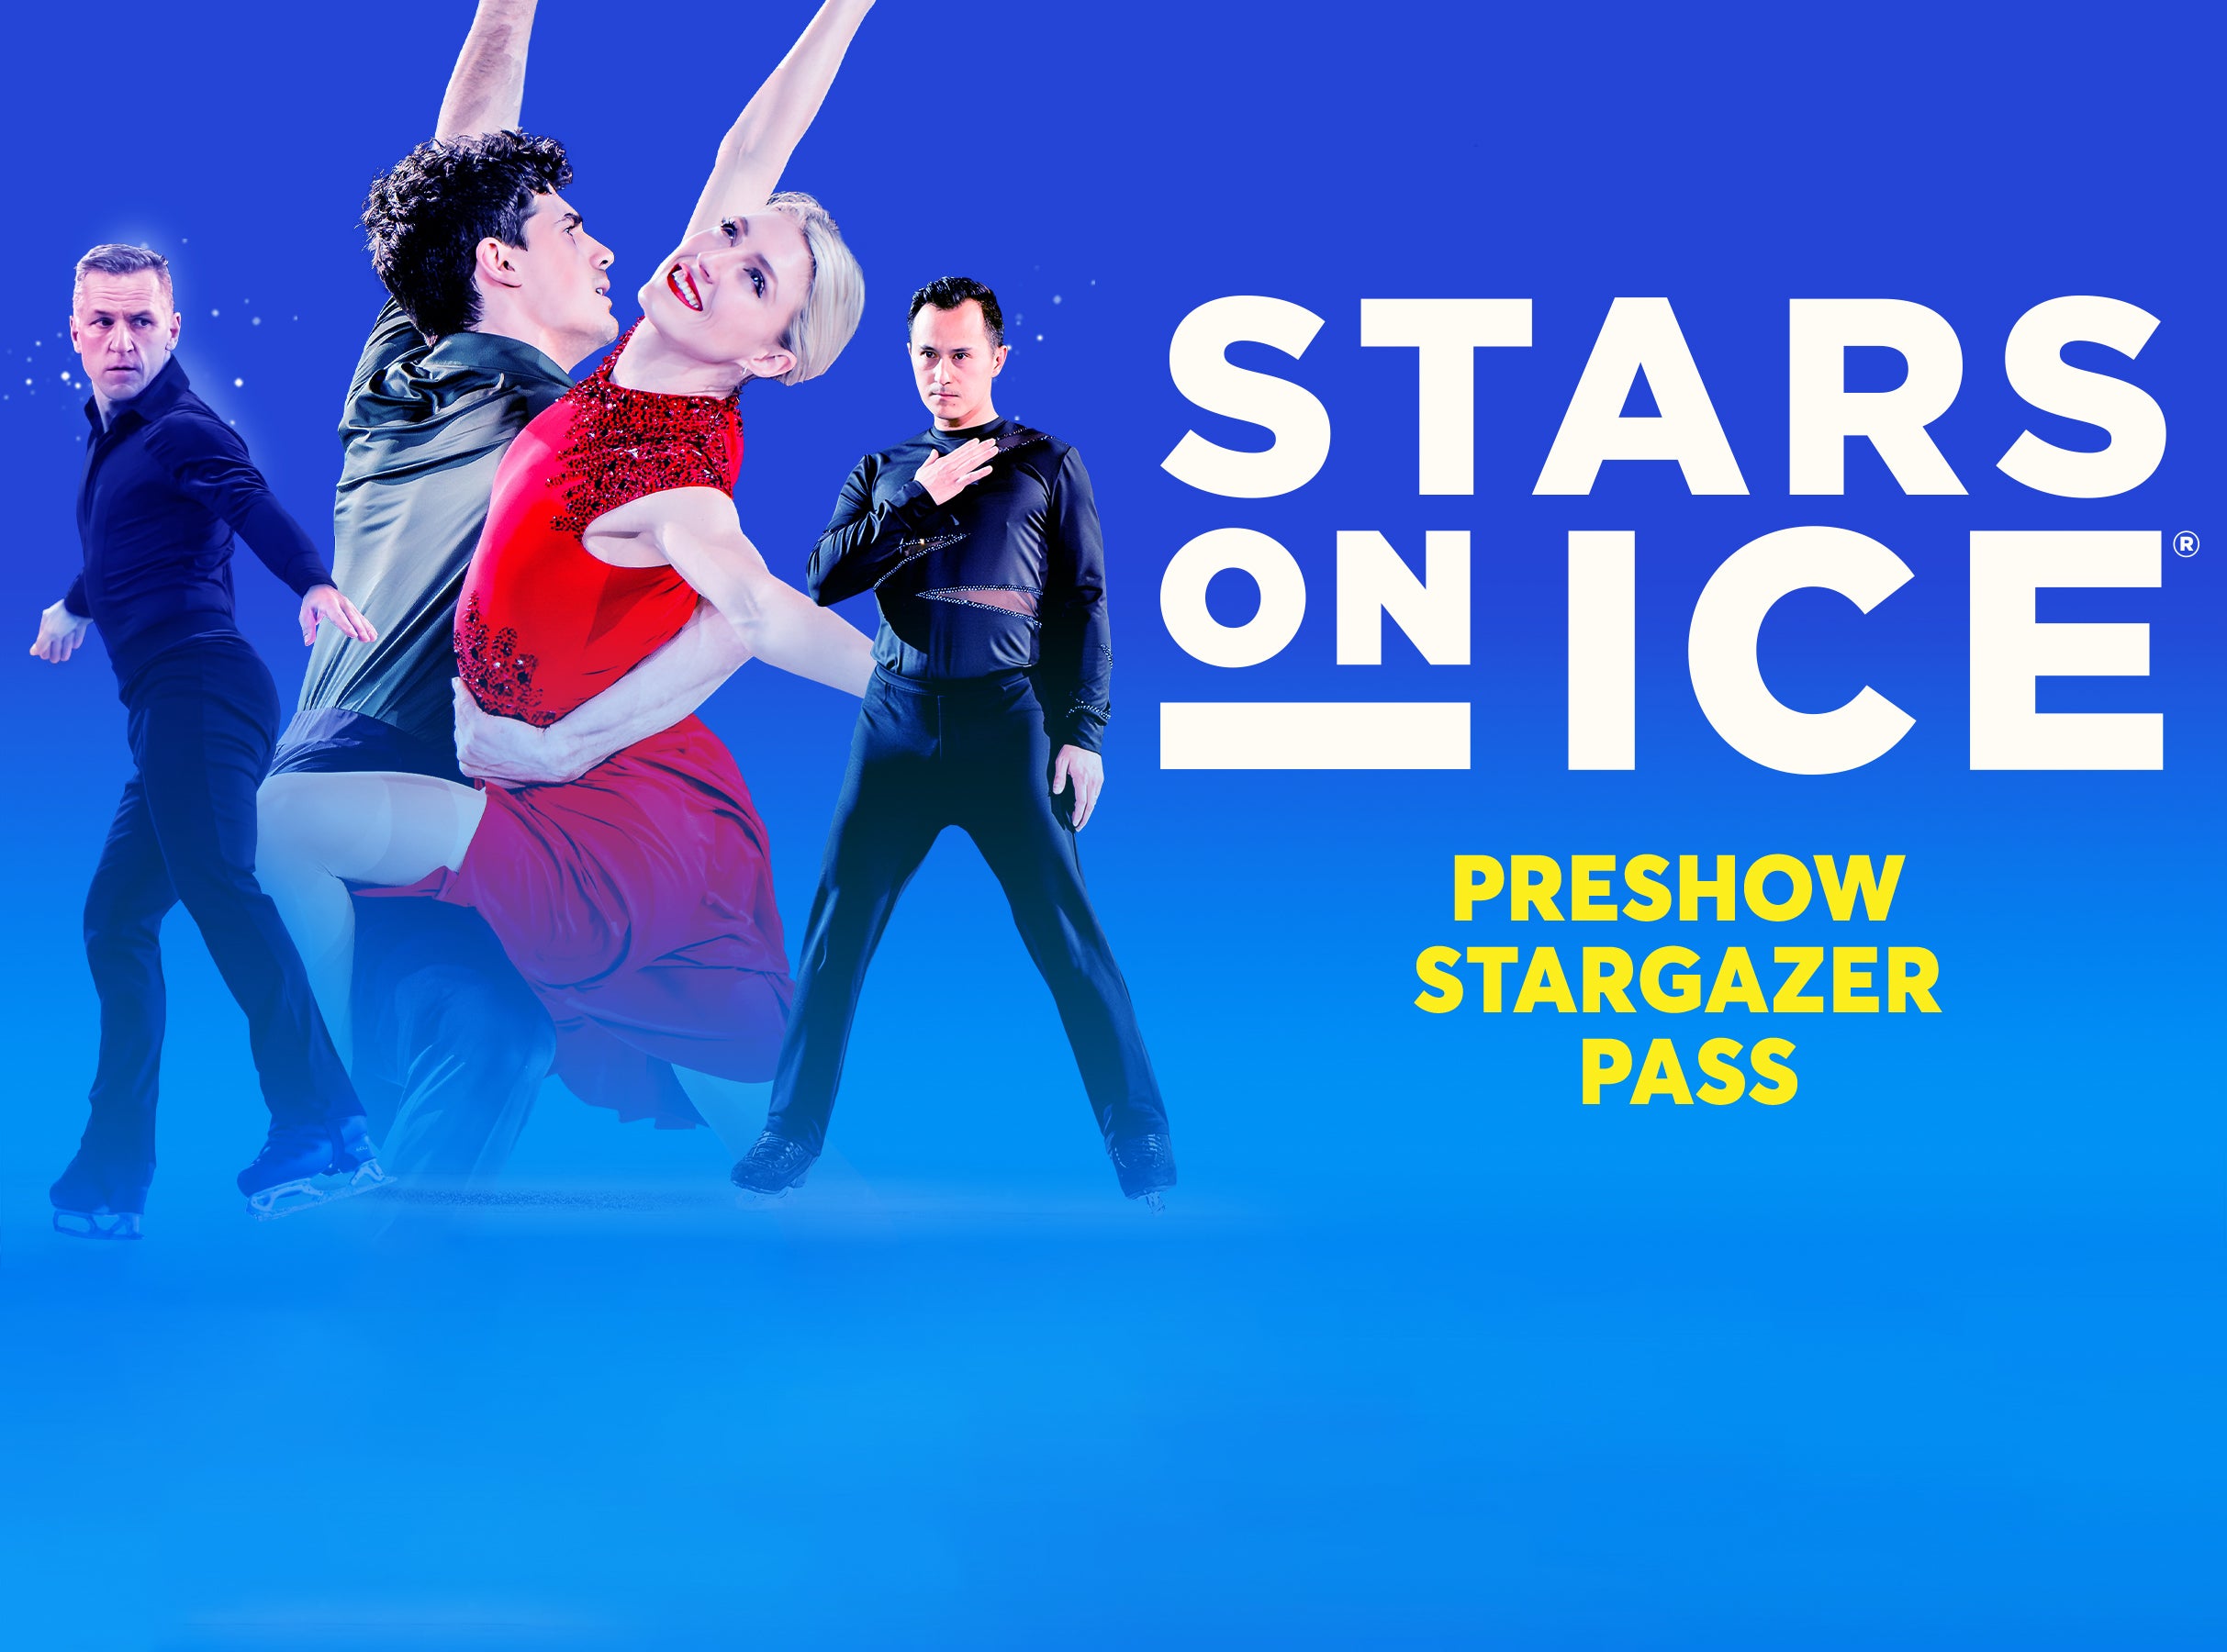 Stars on Ice Pre-Show Stargazer Pass presale information on freepresalepasswords.com